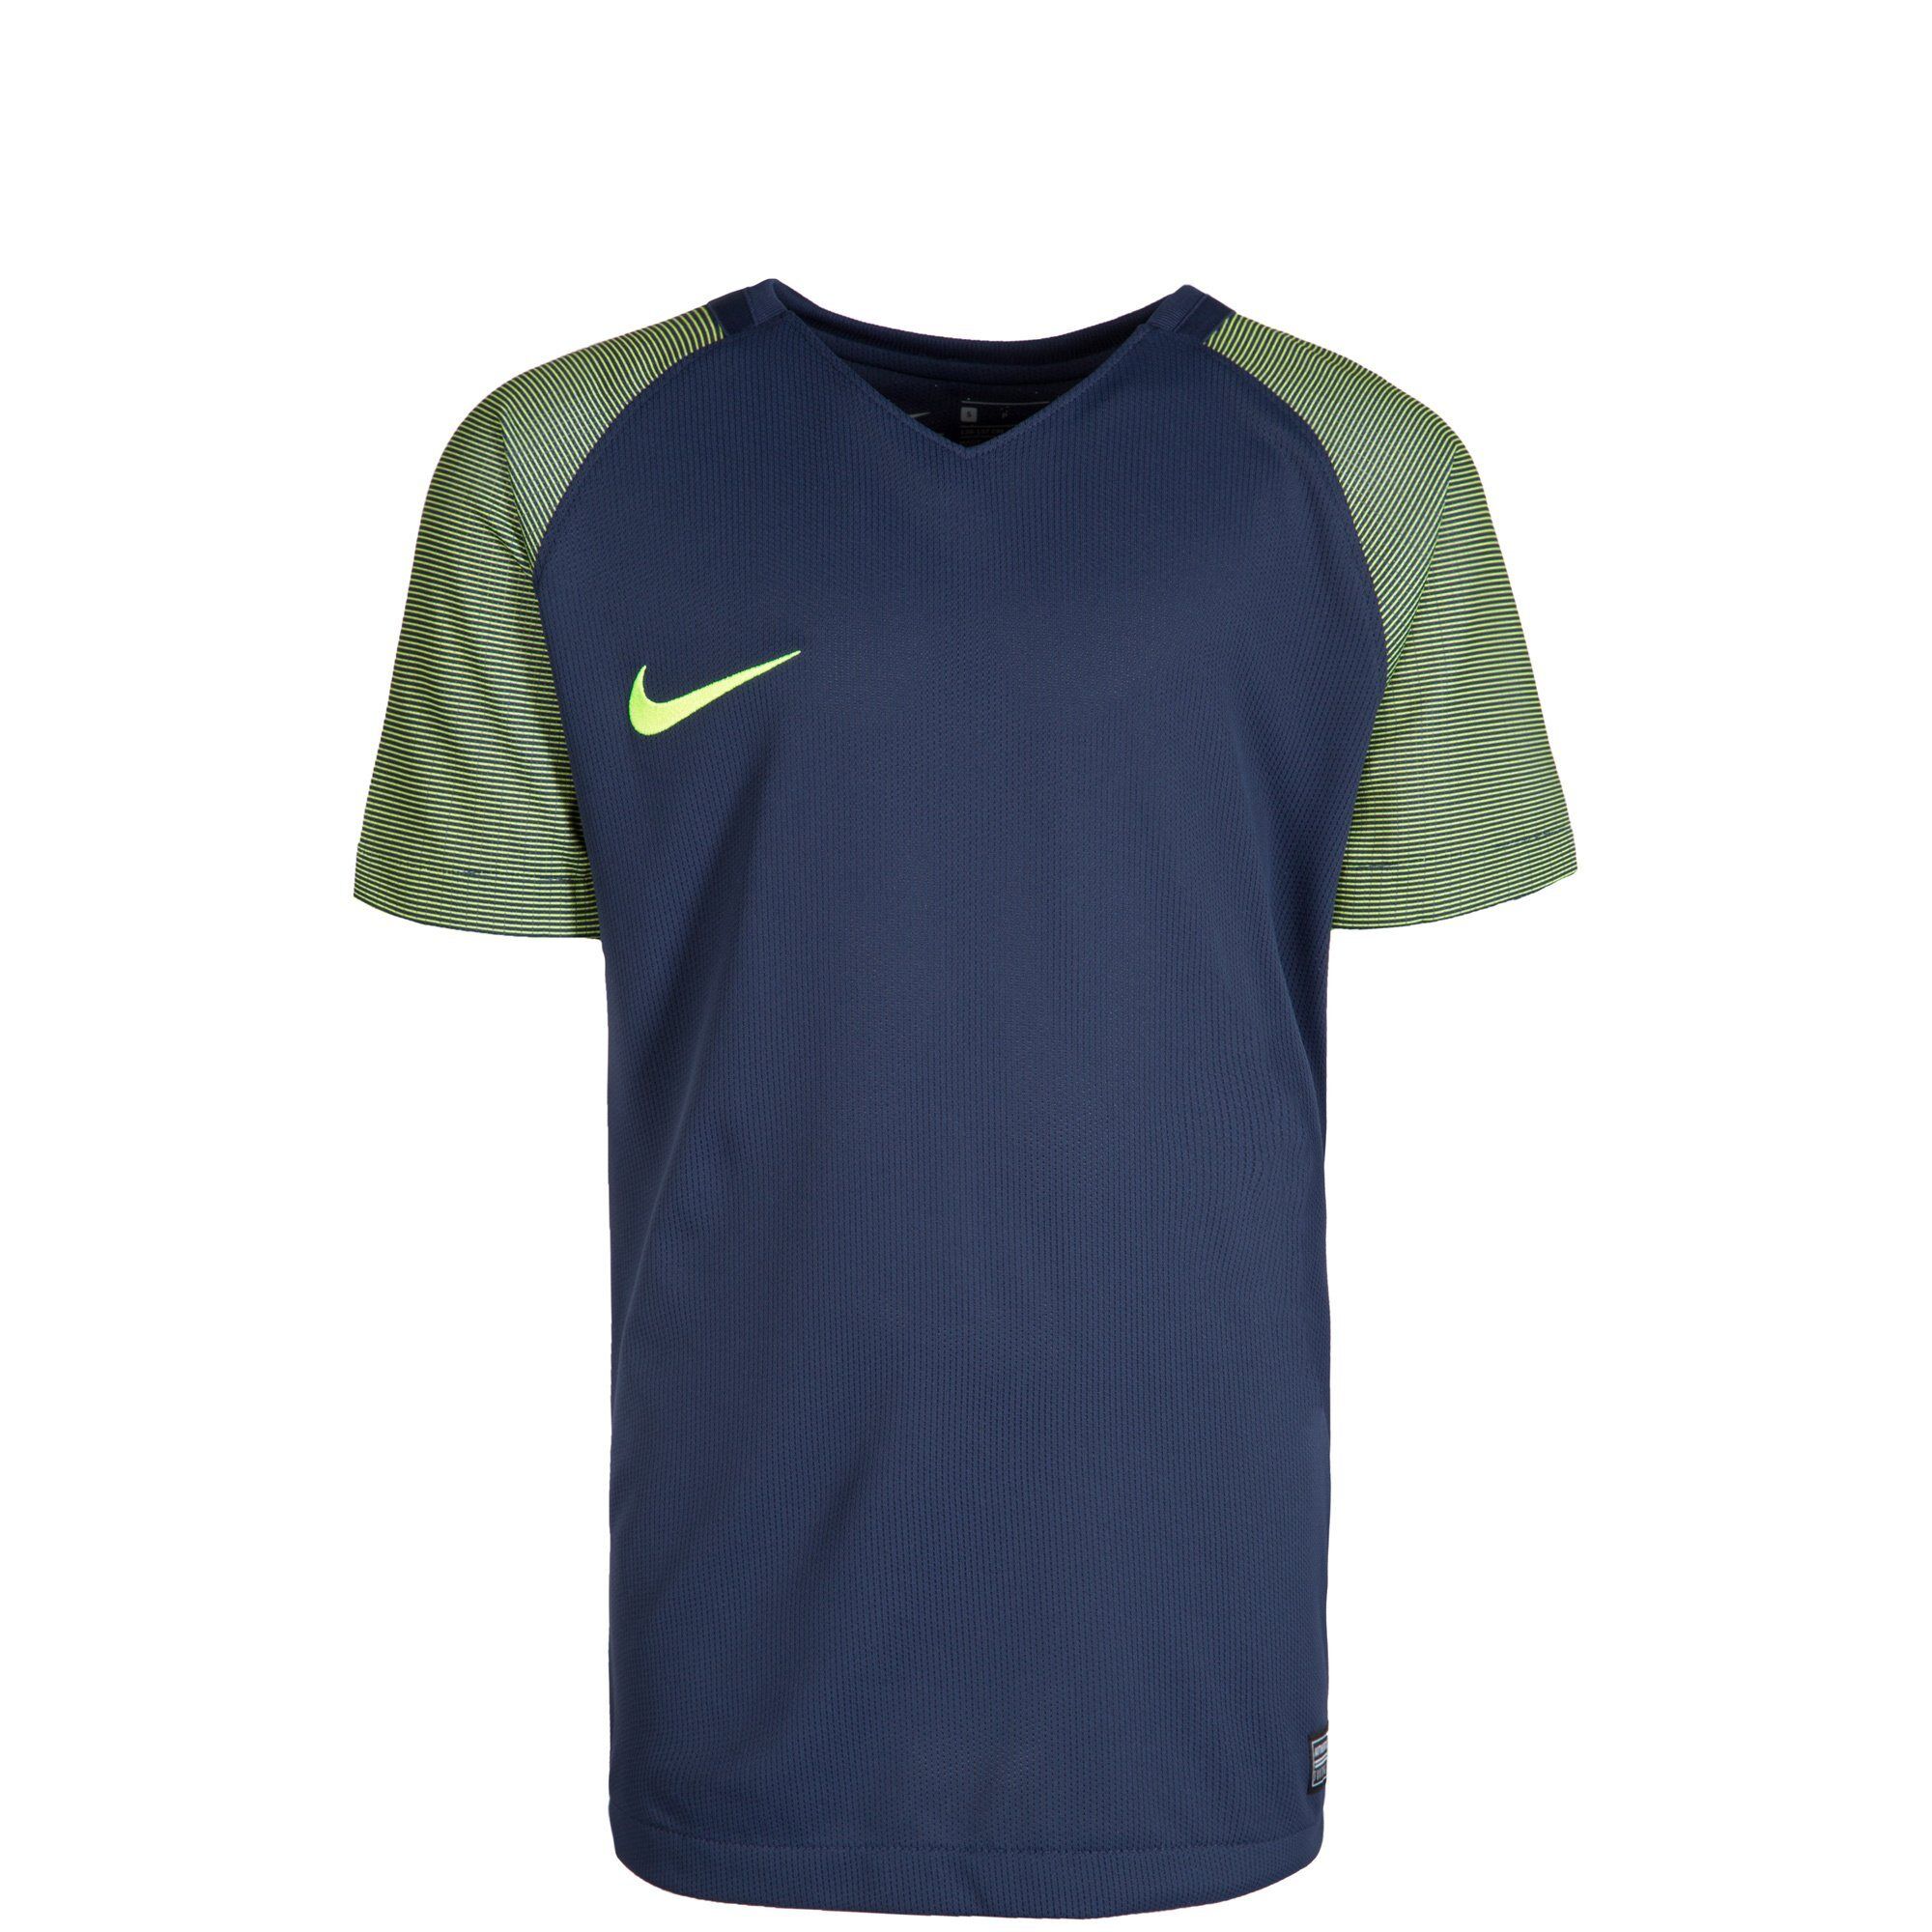 Nike Trainingsshirt »Dry Revolution«, dunkelblau-grün